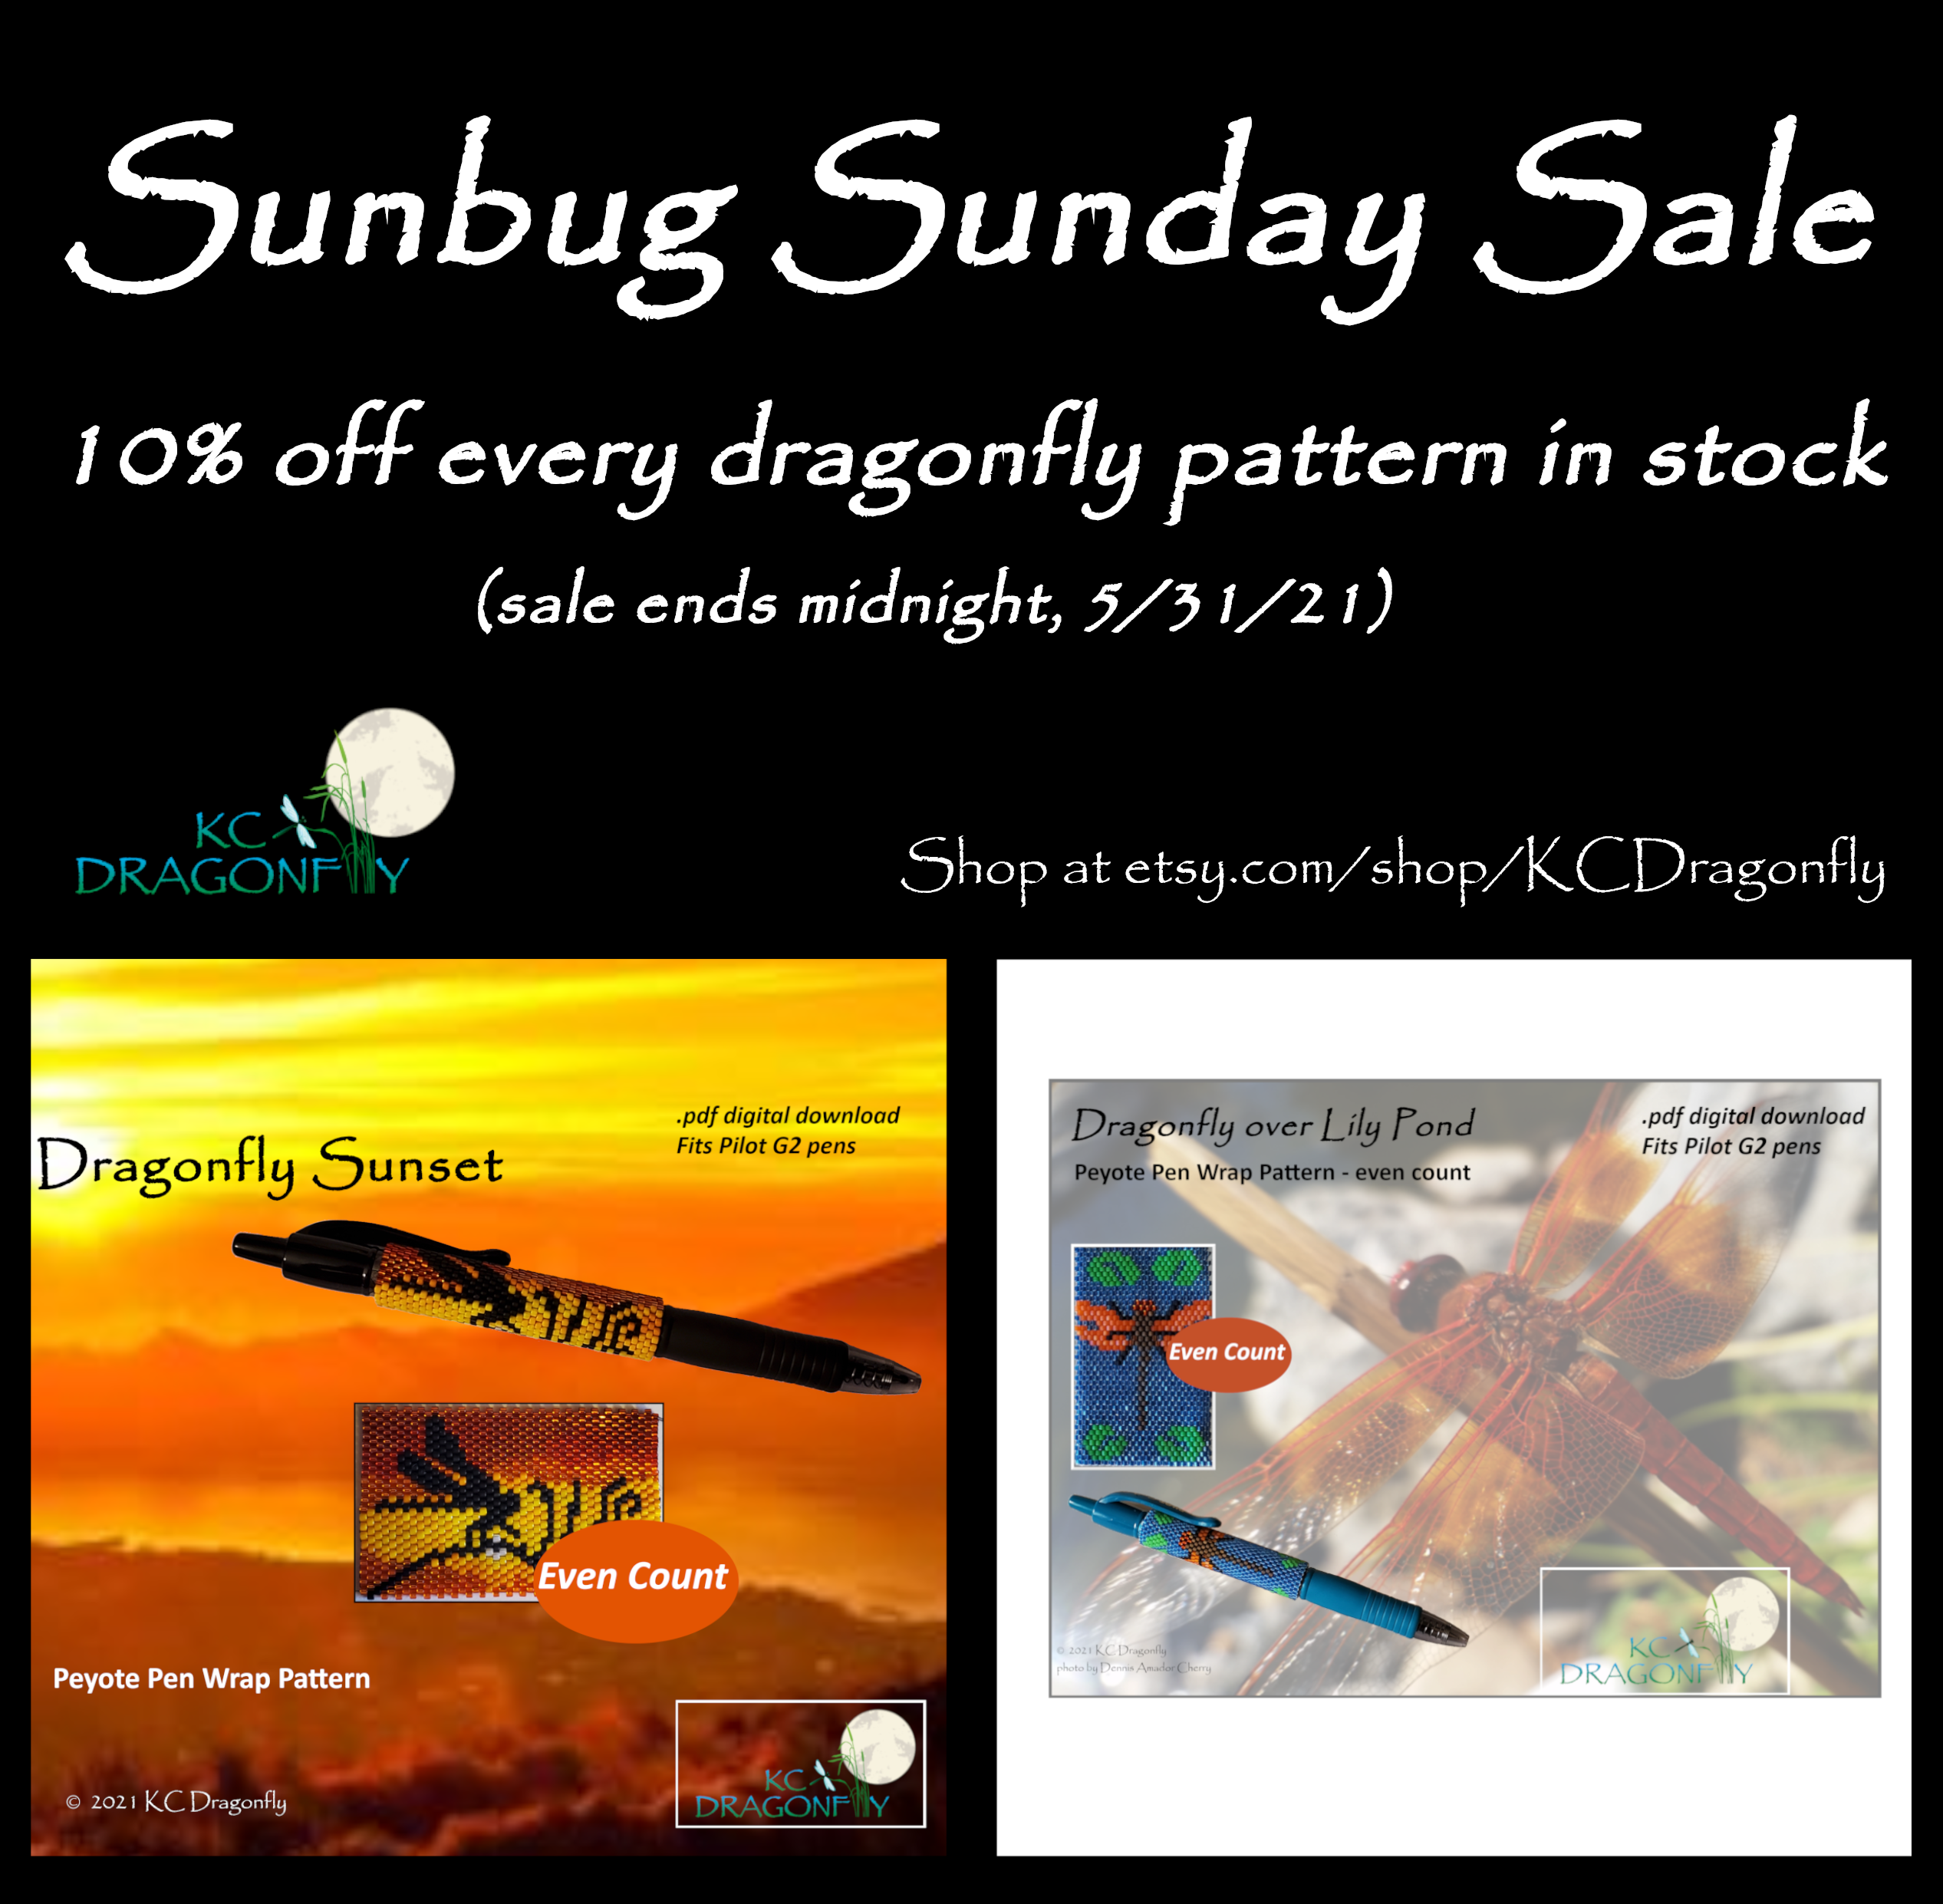 Sunbug Sunday Sales Flyer